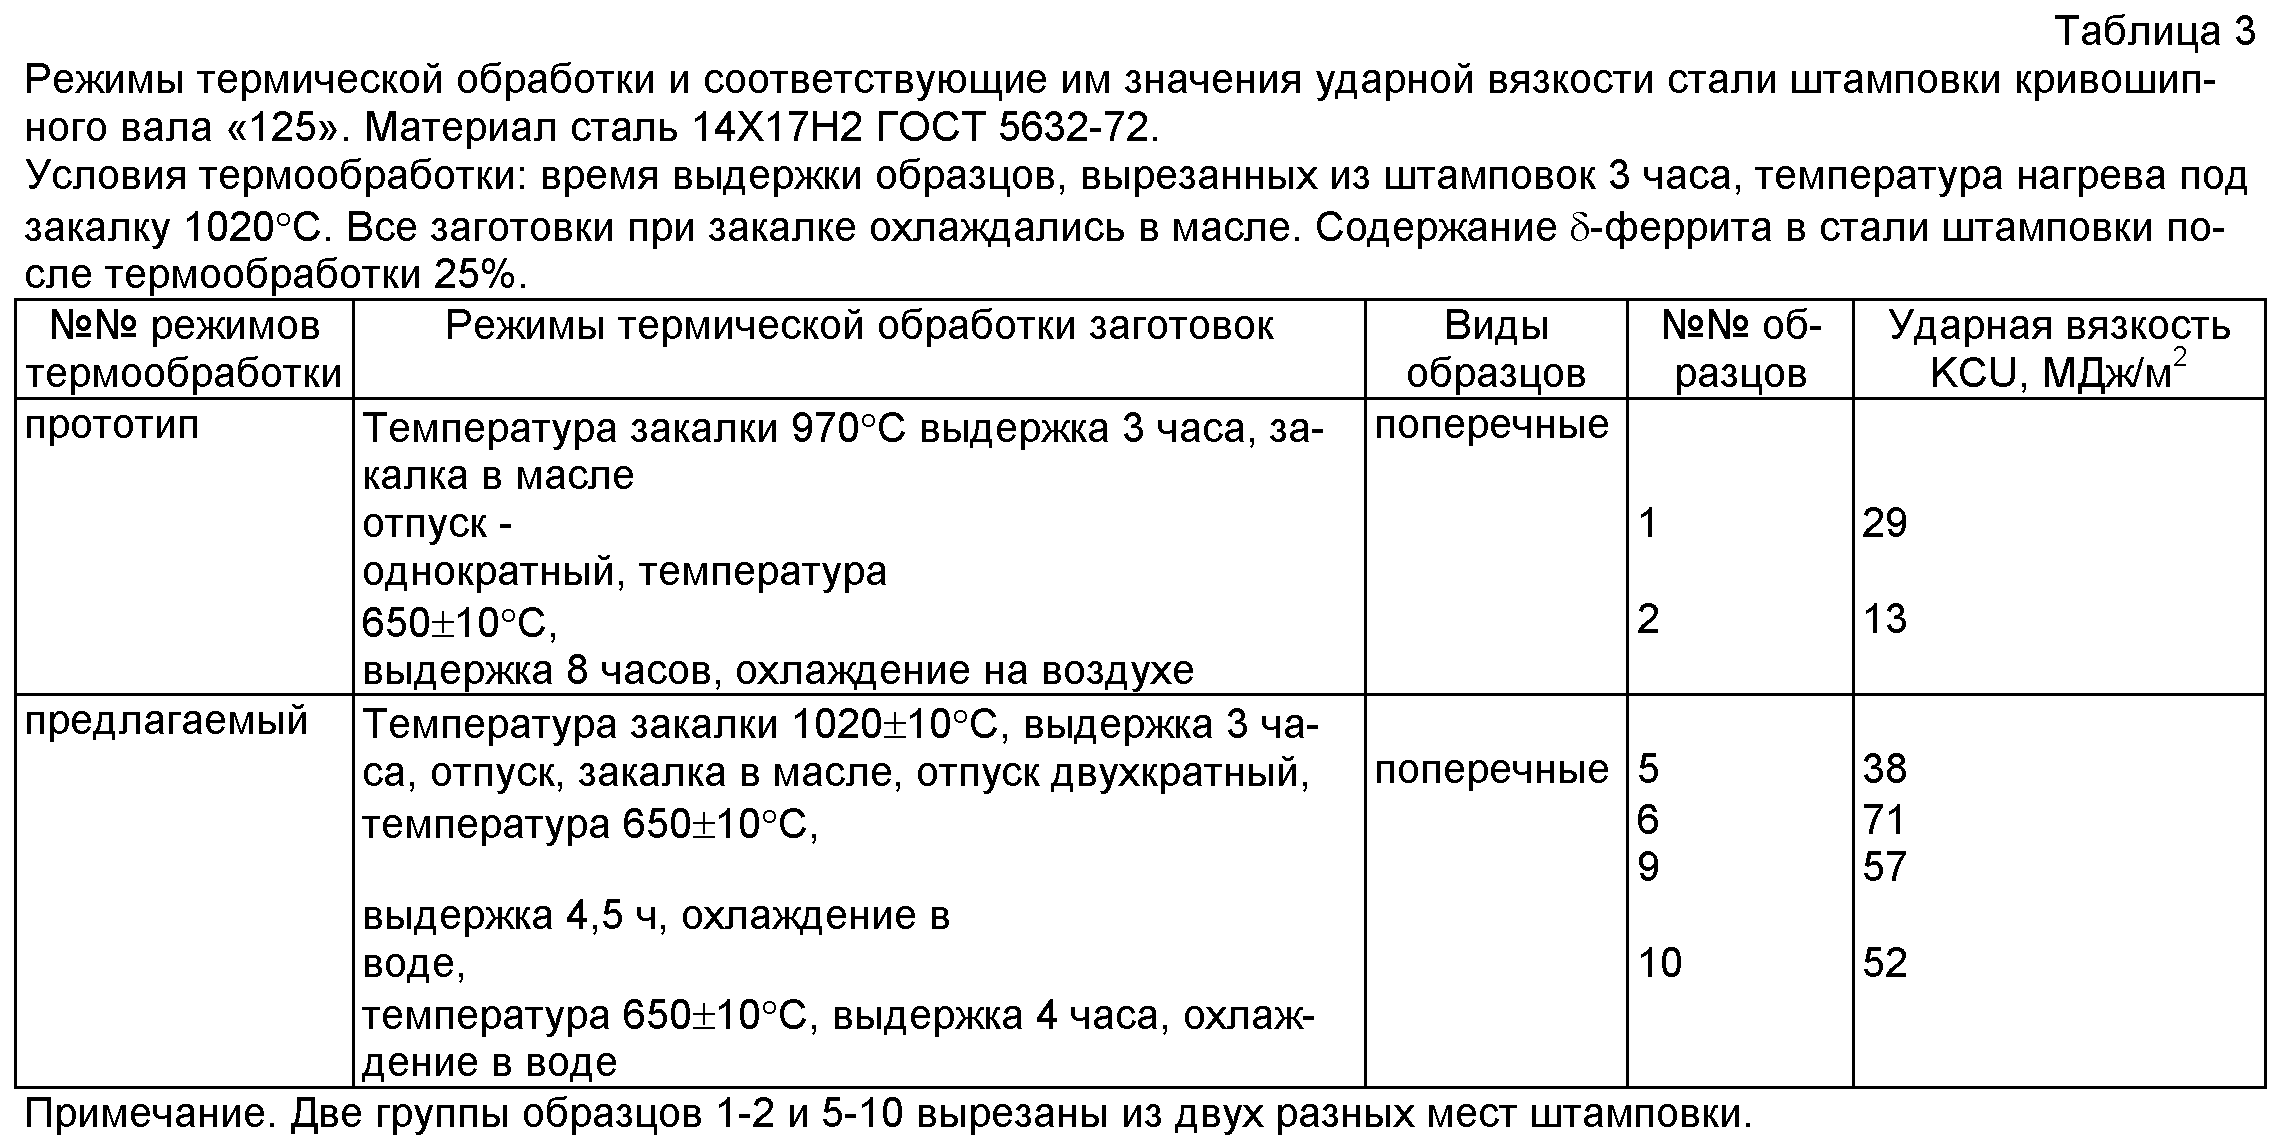 Зарубежные аналоги сталей — справочник — steelser.ru